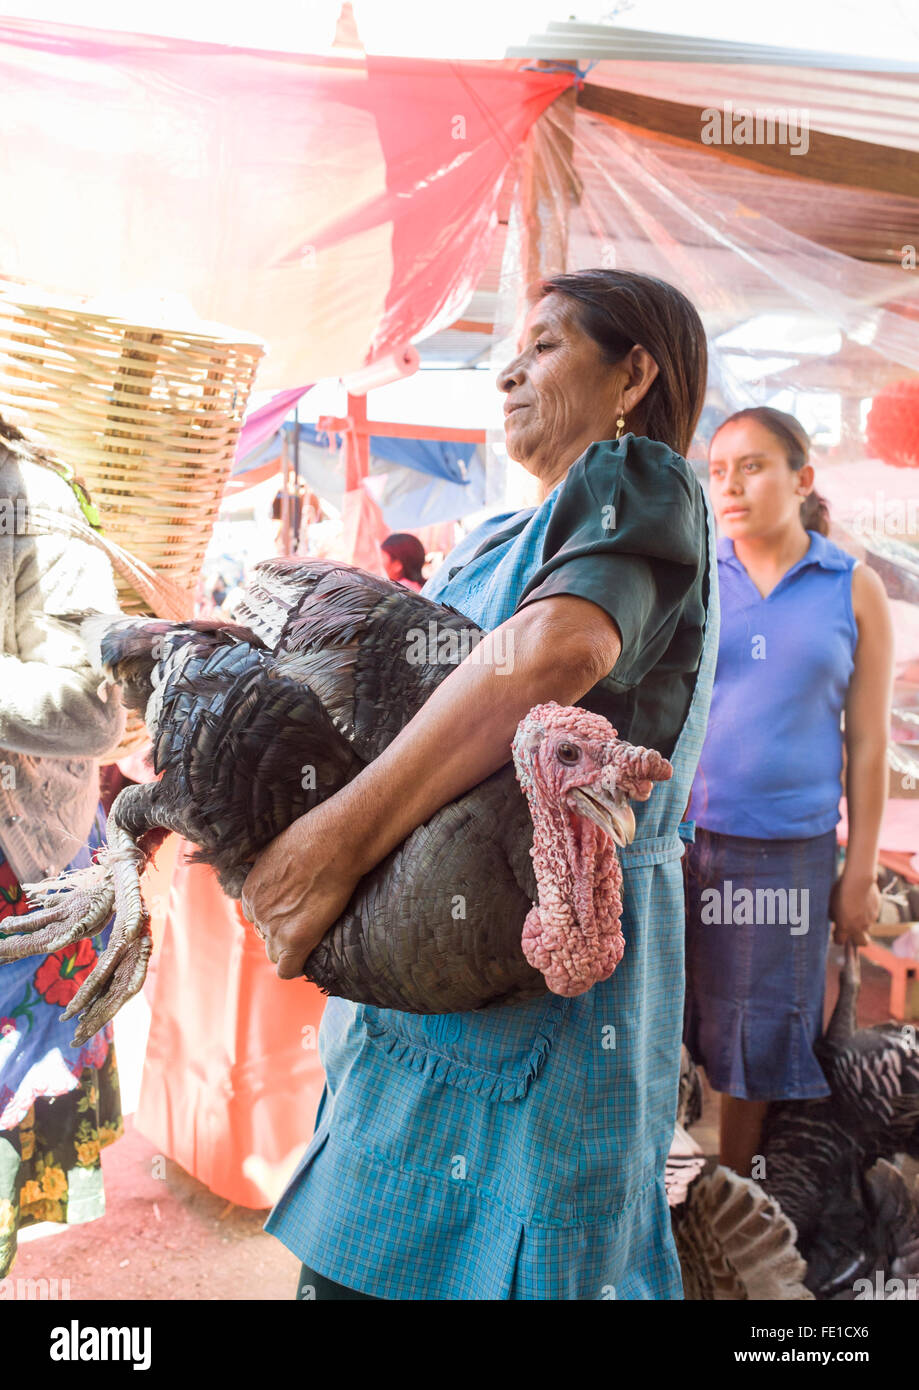 A local woman carrying a big turkey in the Mercado de Abastos public market, Oaxaca, Mexico. Live animals are often for sale. Stock Photo